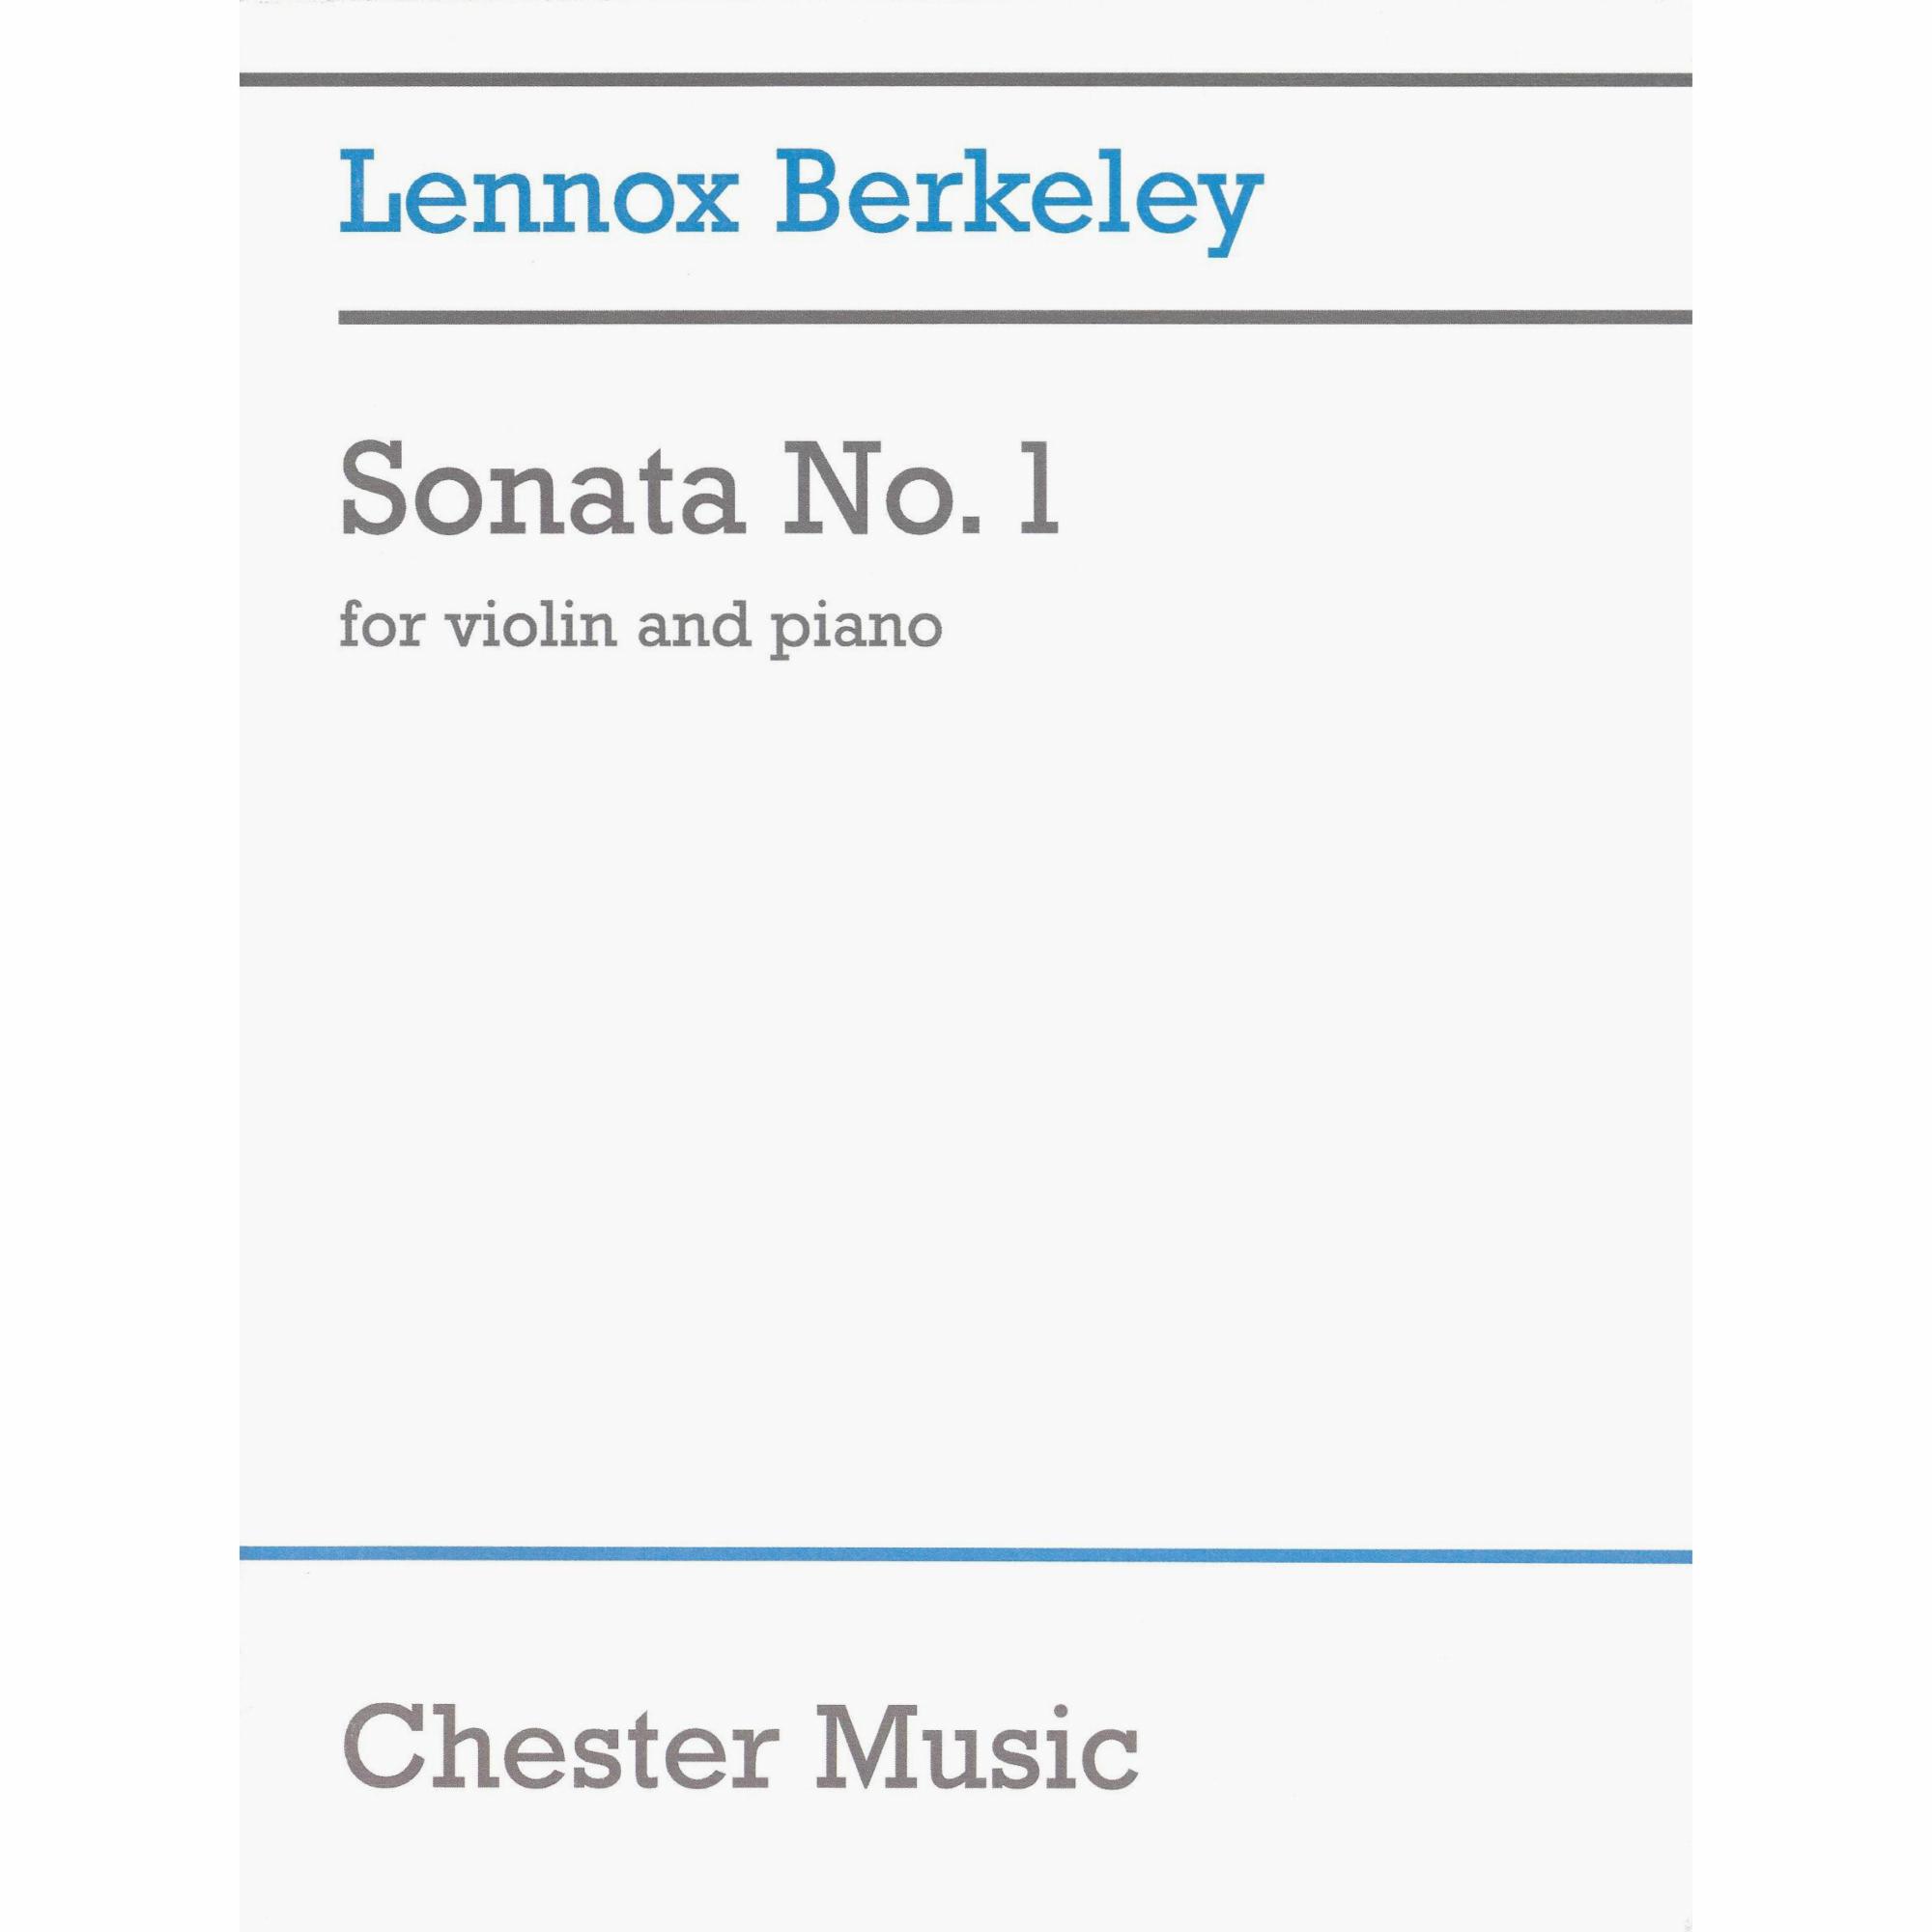 Berkeley -- Sonata No. 1 for Violin and Piano